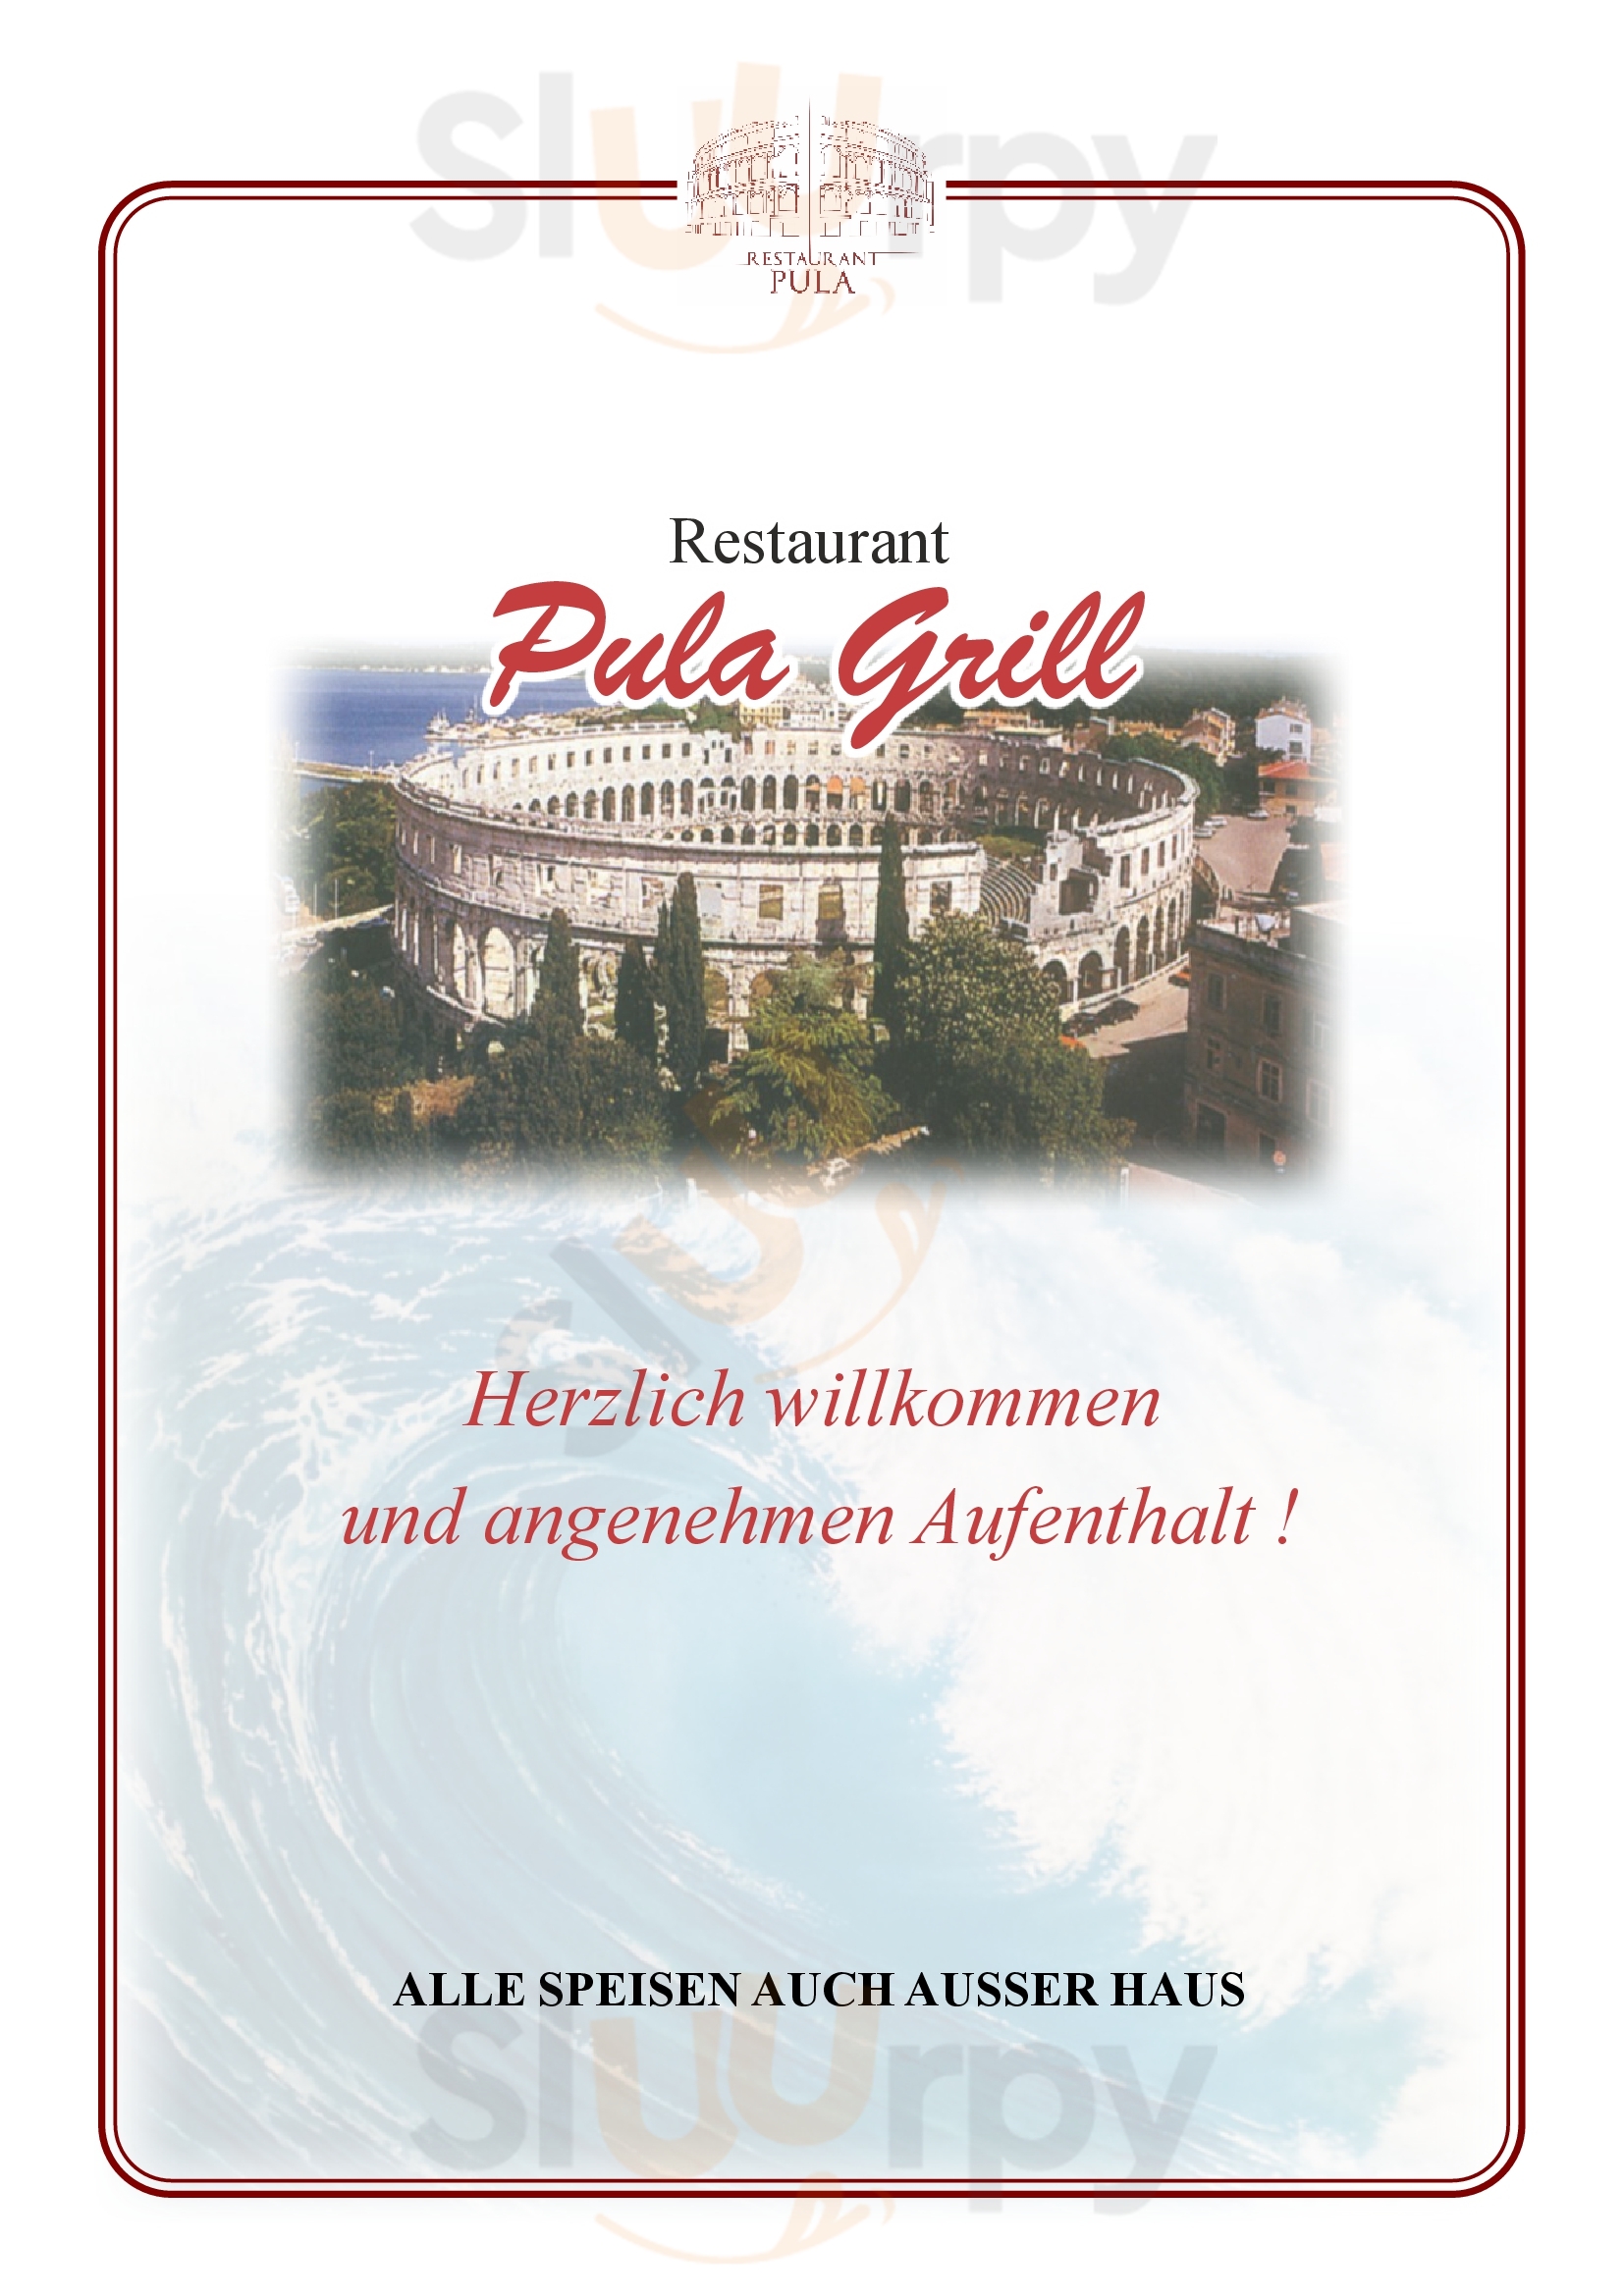 Restaurant Pula-grill Berlin Menu - 1